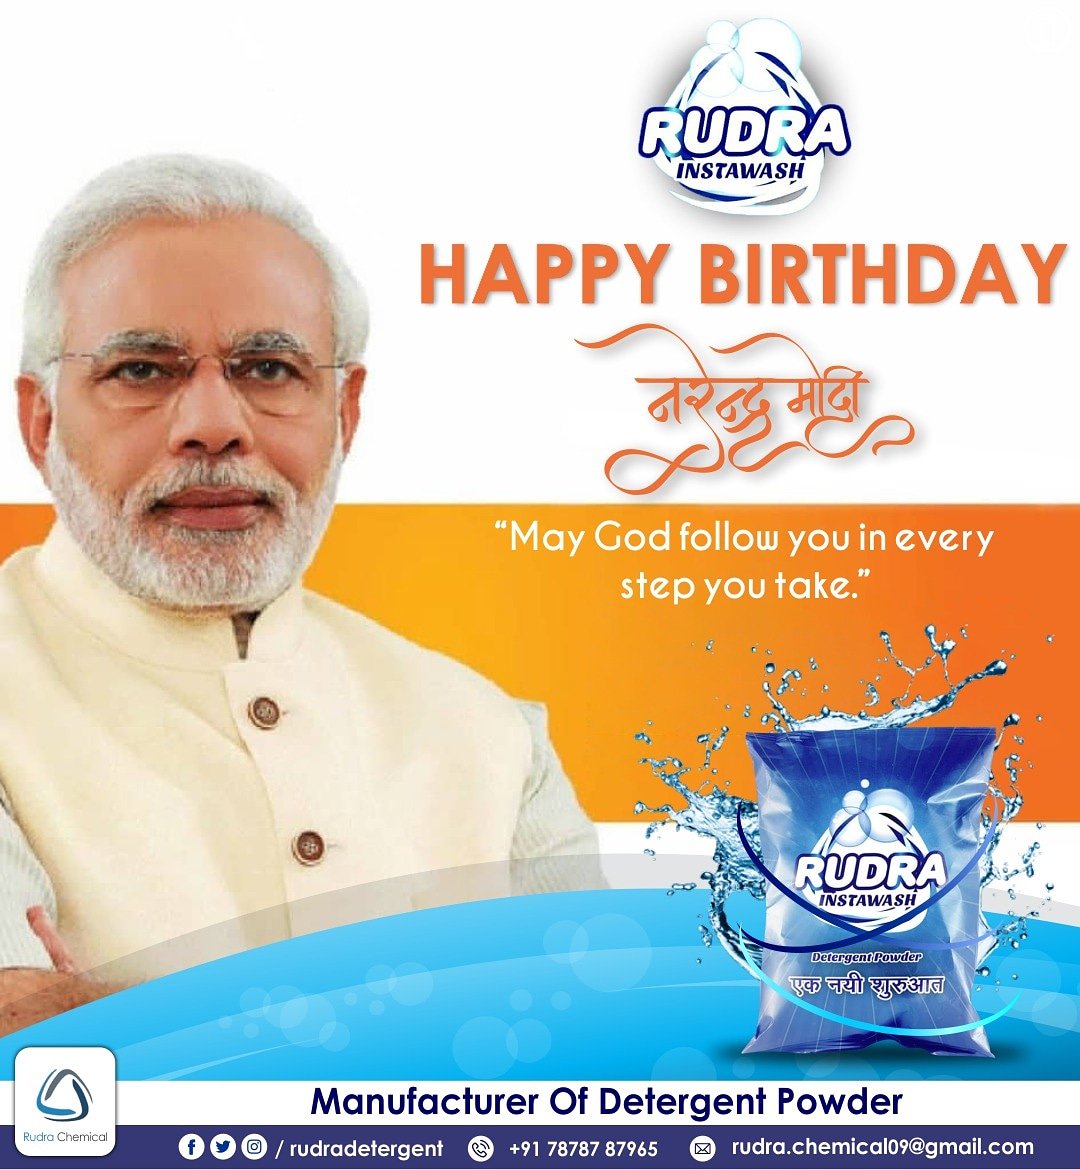 Happy Birthday To Our Honourabel Prime Minister Shri @narendramodi ji

#HappyBdayPMModi
#HappyBirthdayNarendraModi #HappyBirthdayNarendraModiji #ShriNarendraModi #PMModiBirthday

#RudraInstawash #RudraDetergentPowder #LaundryDetergent #Detergent #DetergentPowder #Cleancloths